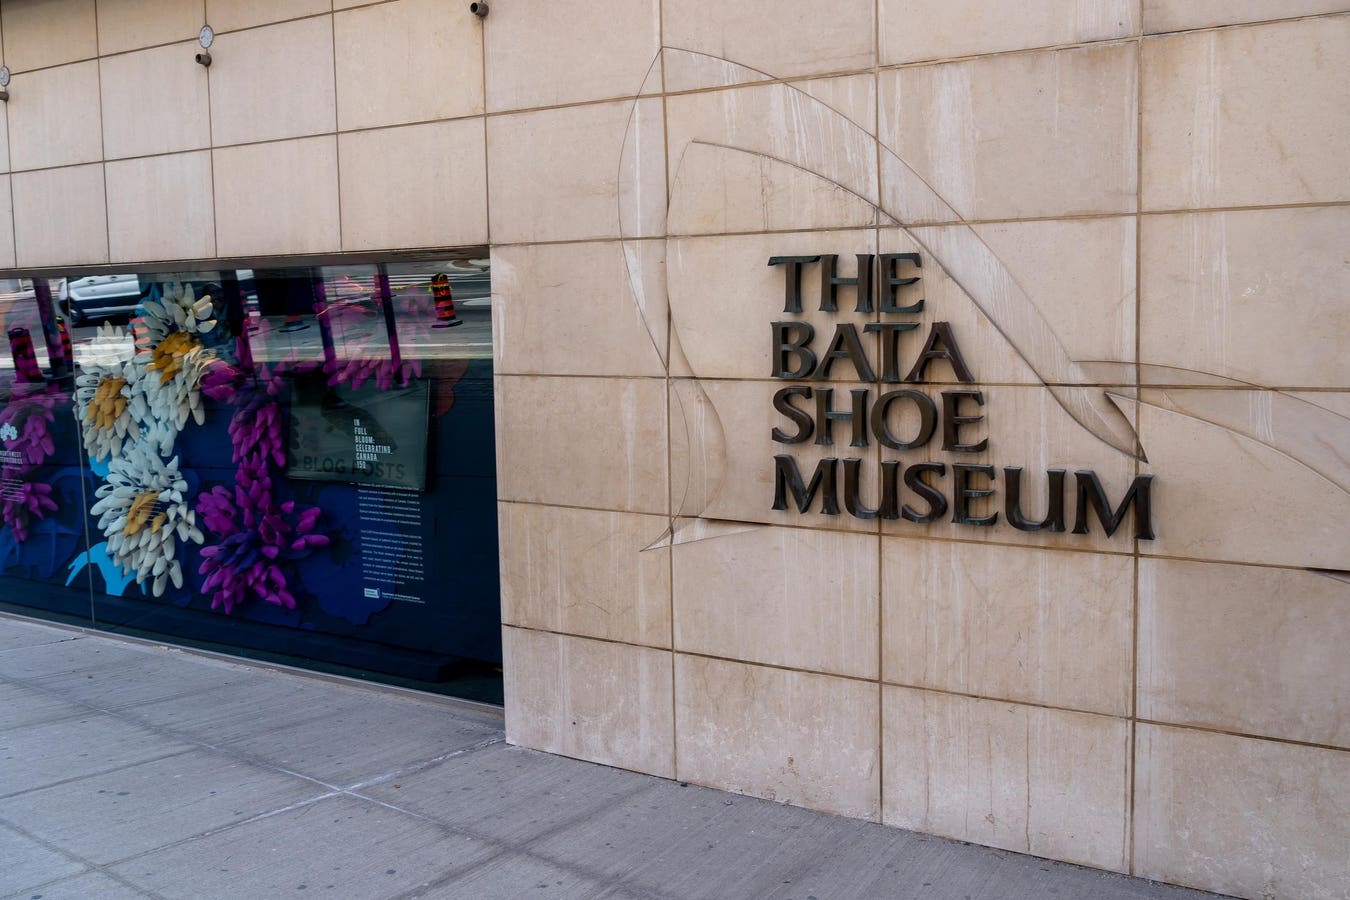 Visit Bata Shoe Museum’s Crime And Footwear Exhibition